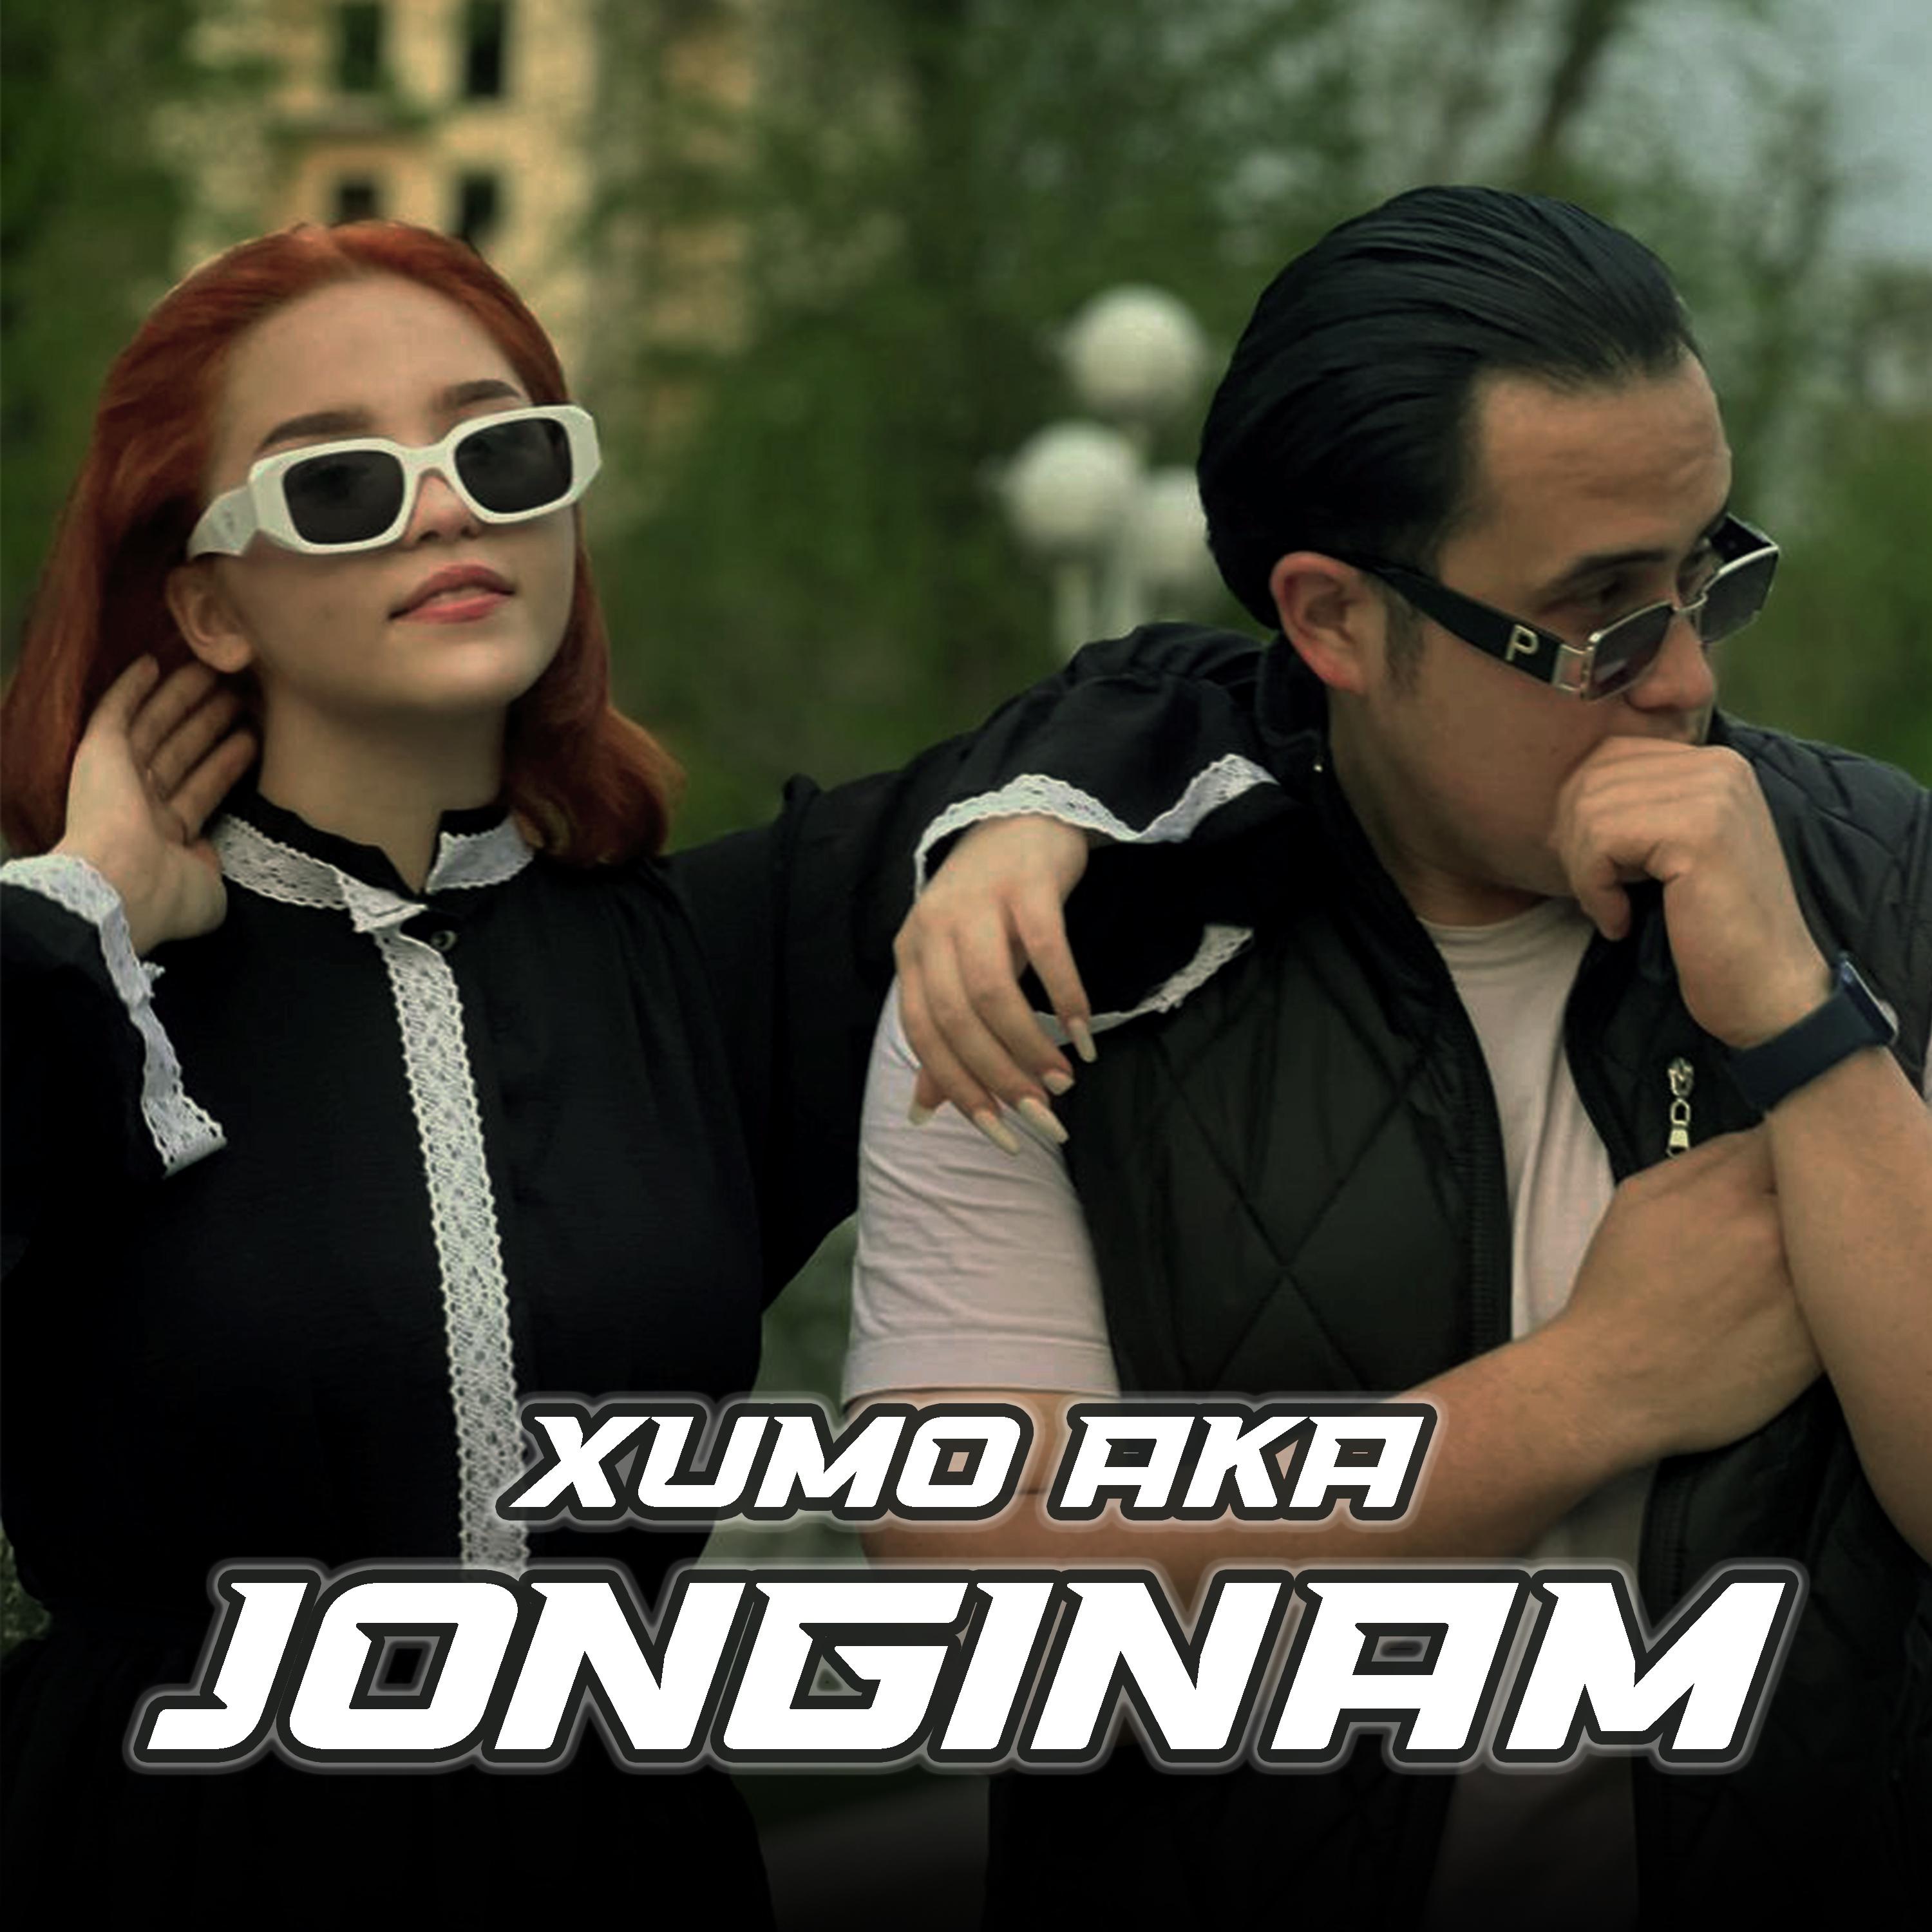 Постер альбома Jonginam